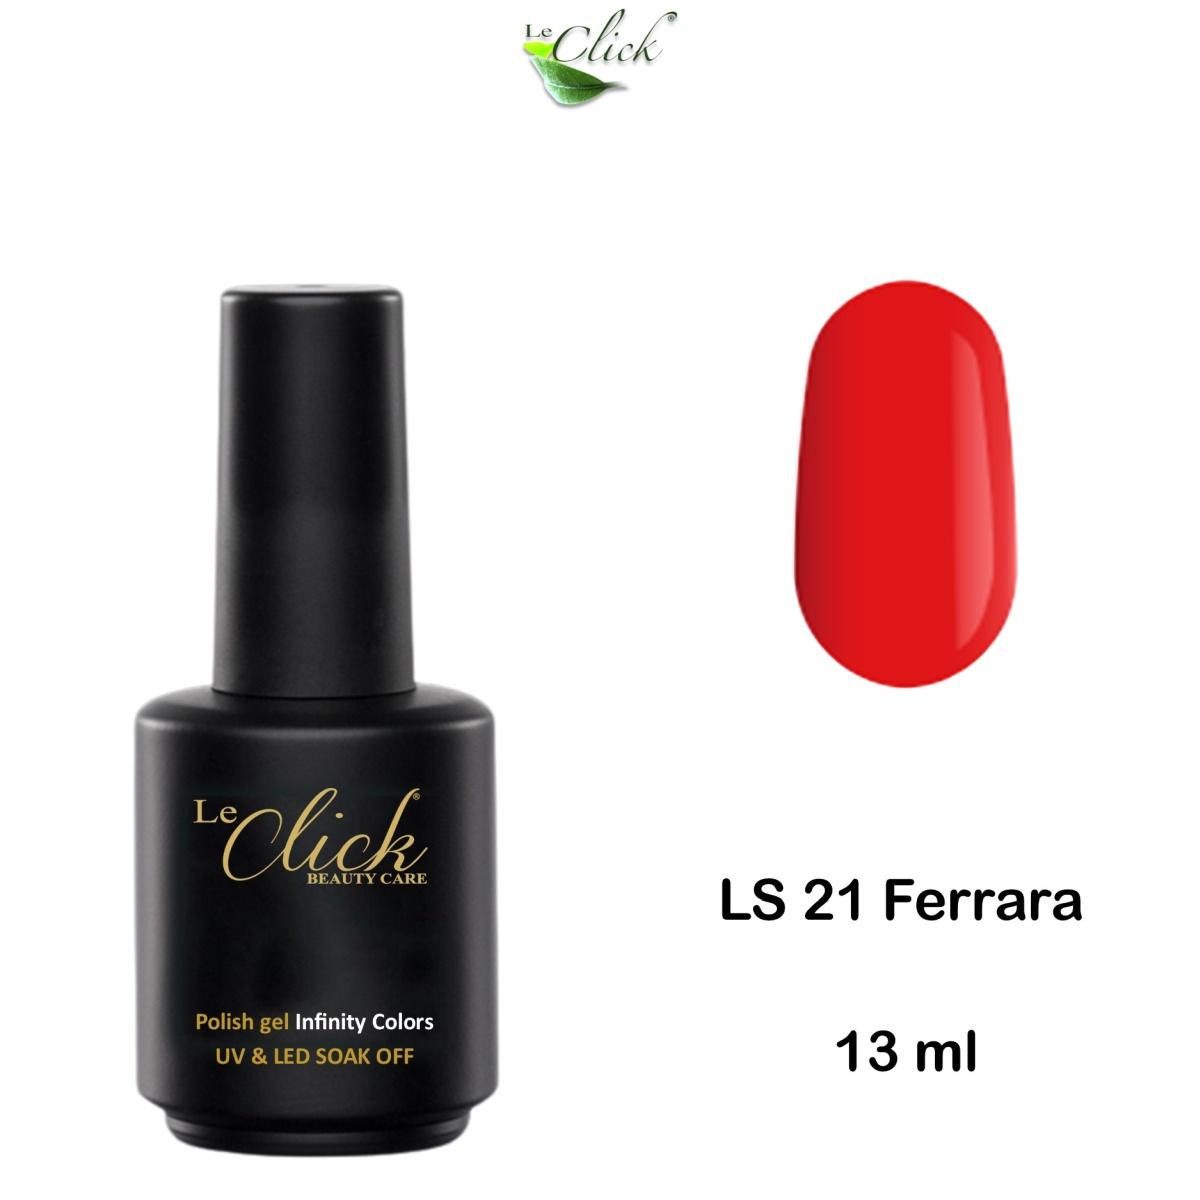 Le Click Polish Gel Infinity ( LS-21 ) Ferrara 13 ml.